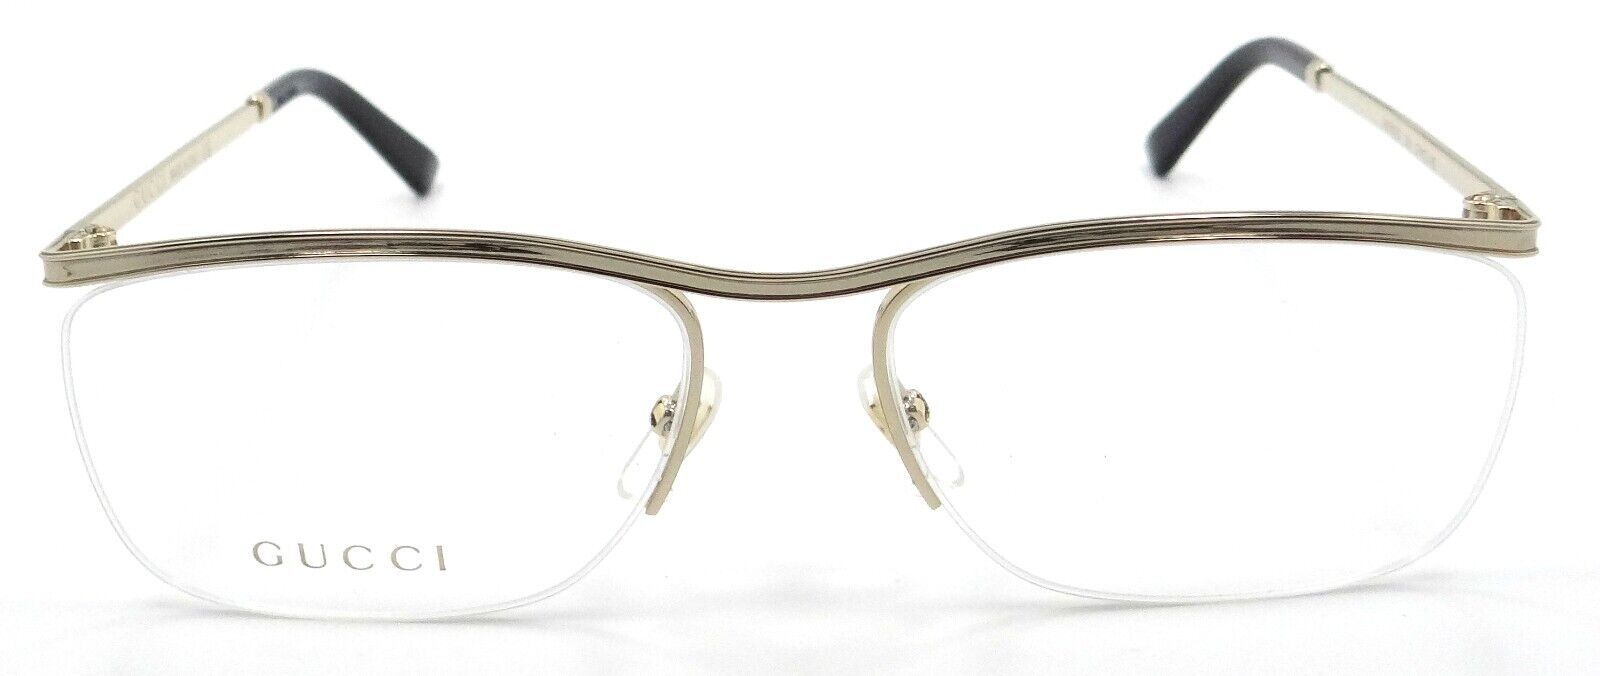 Gucci Eyeglasses Frames GG0823O 001 57-17-145 Gold Made in Italy-889652310718-classypw.com-2